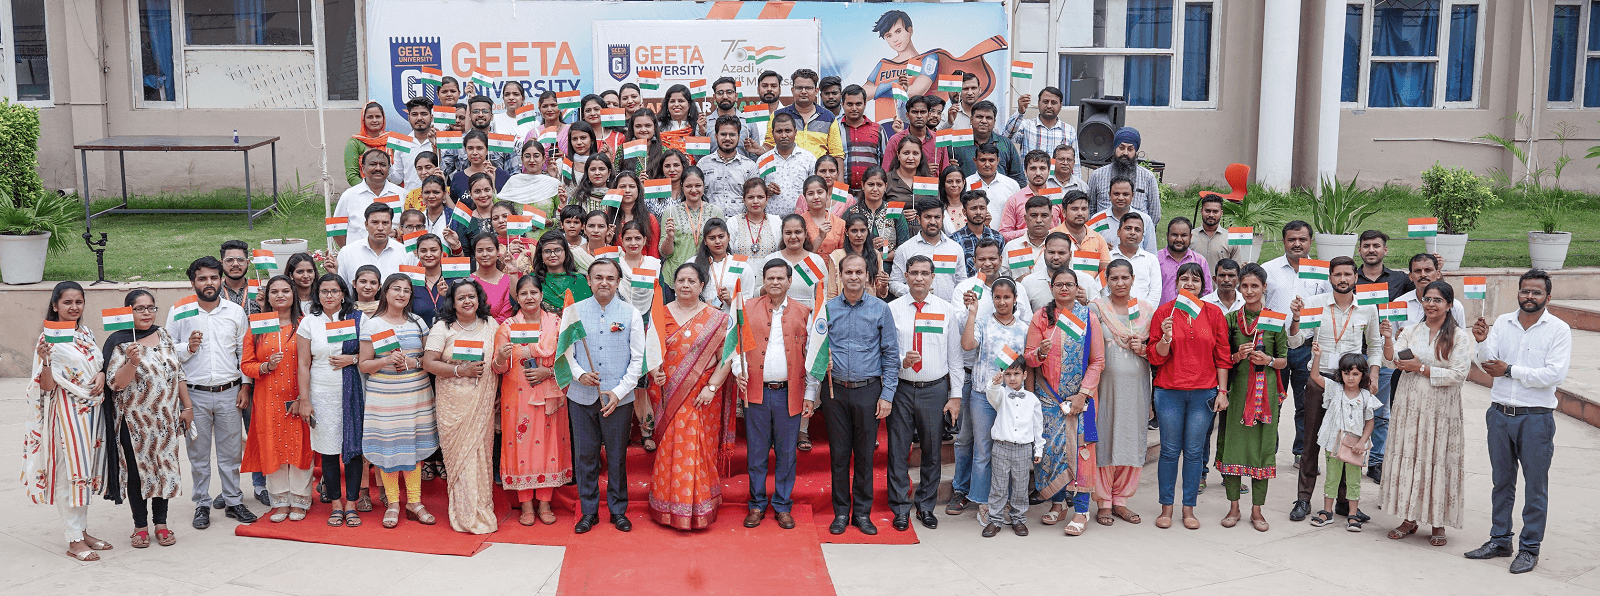 Geeta University, Panipat Image